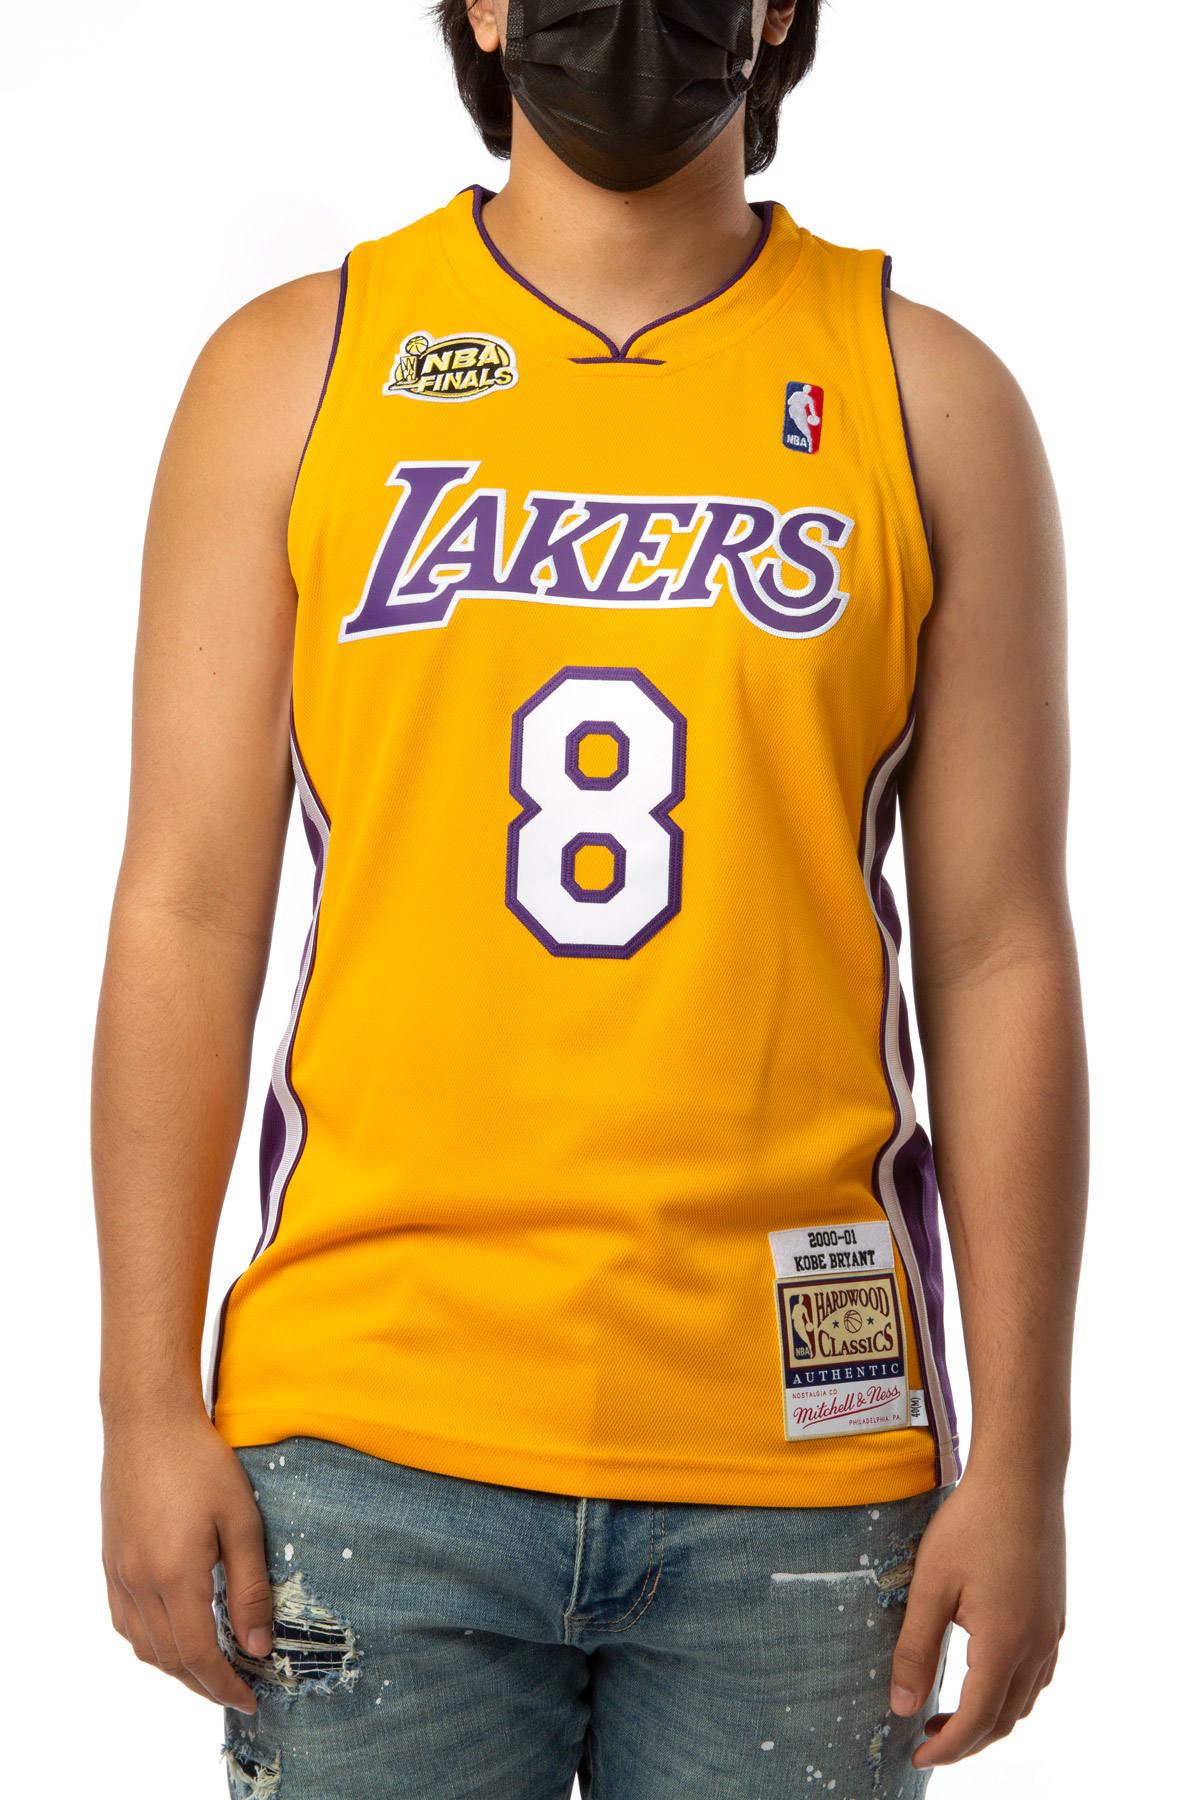 Los Angeles Lakers Kobe Bryant 2000- 01 Authentic Swingman Jersey - Yellow  - Mens